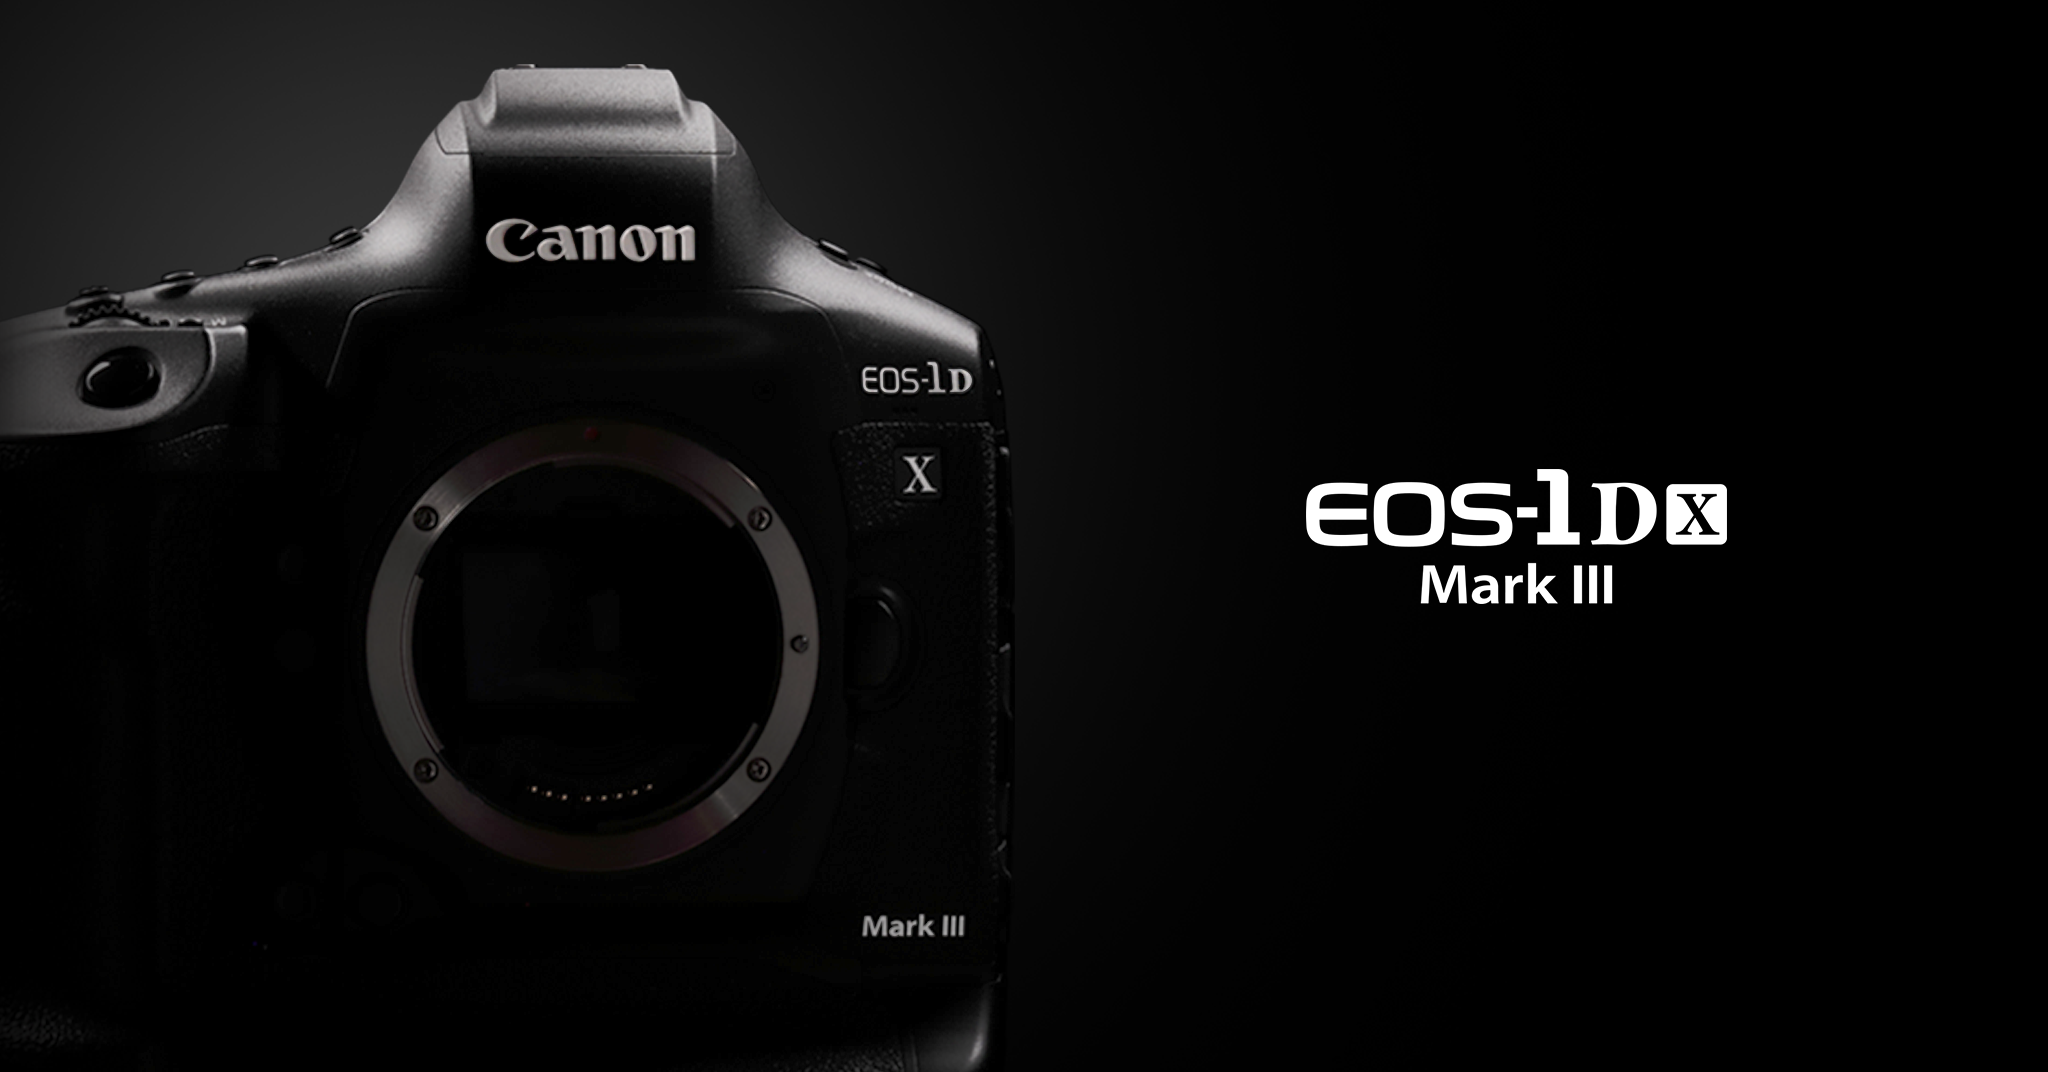 Canon Announces the Development of the EOS-1D X MARK III